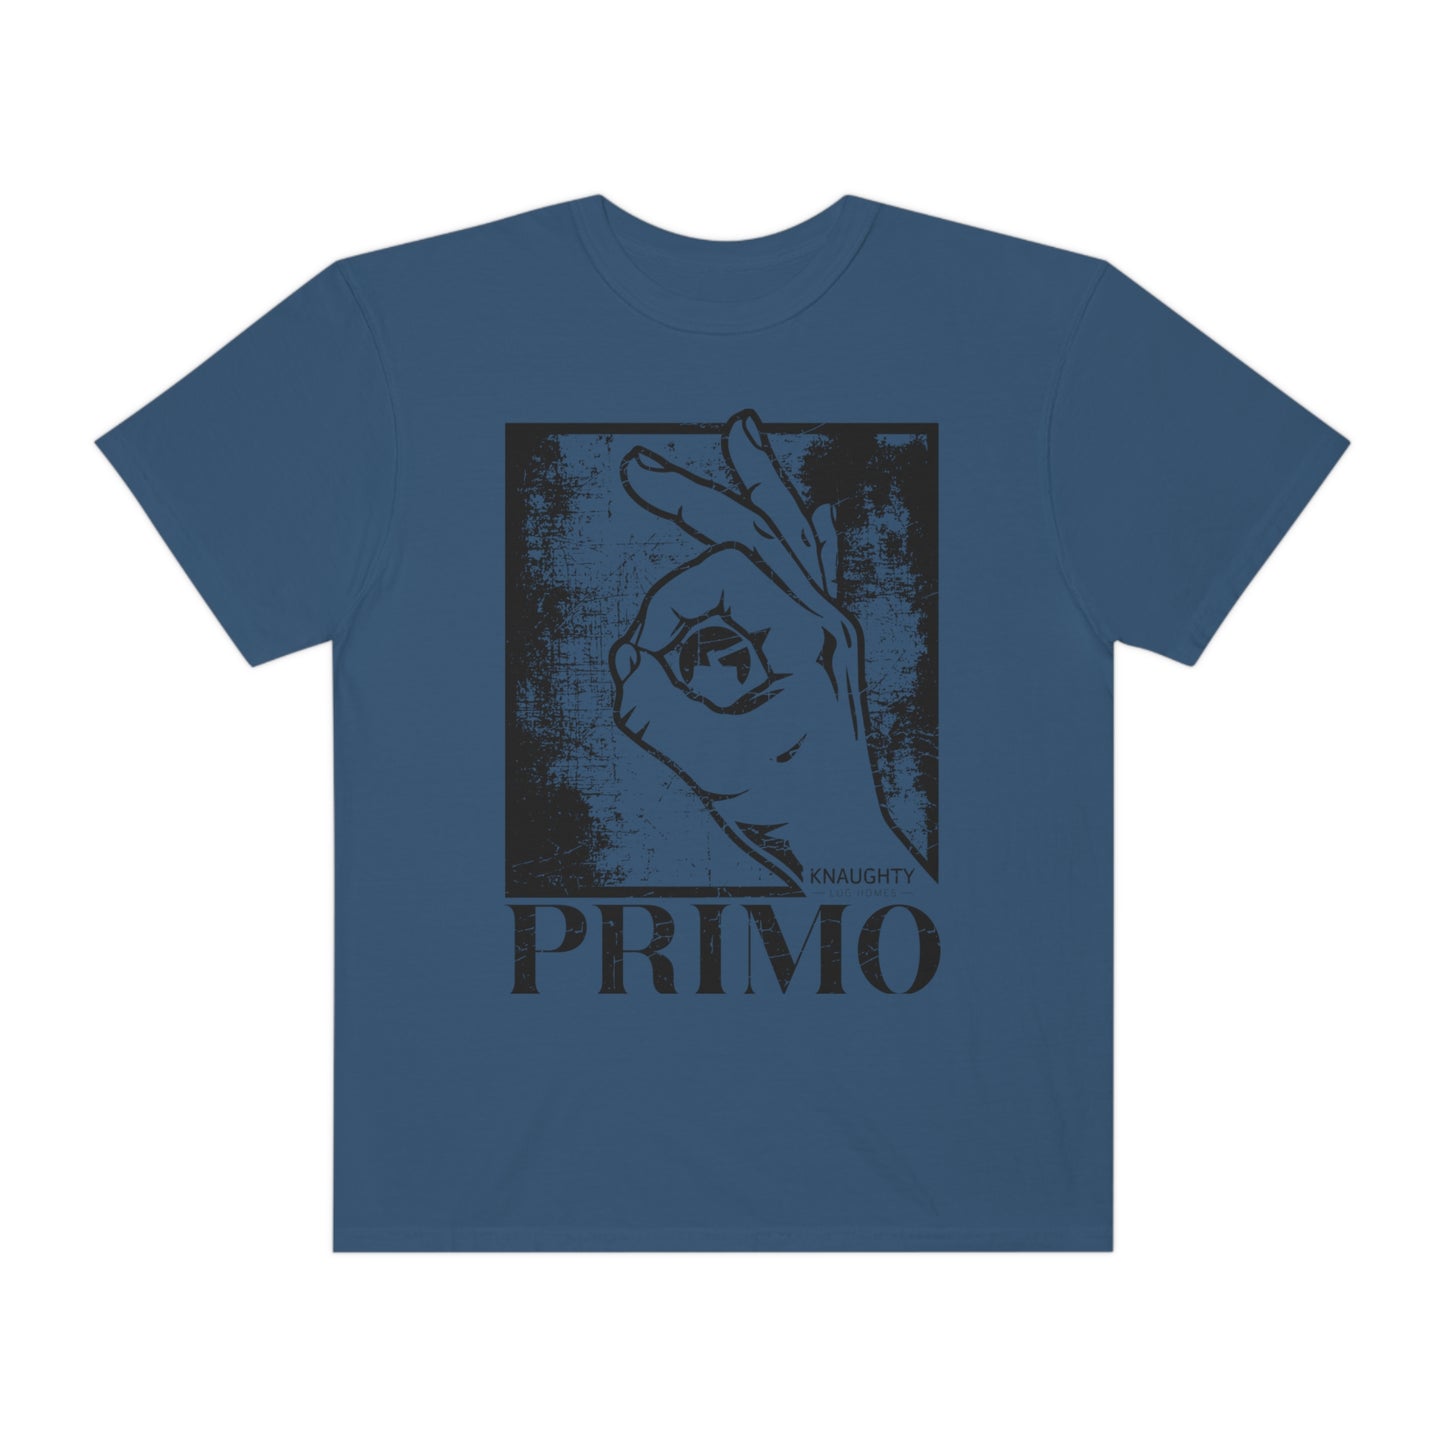 "PRIMO" Graphic T-Shirt